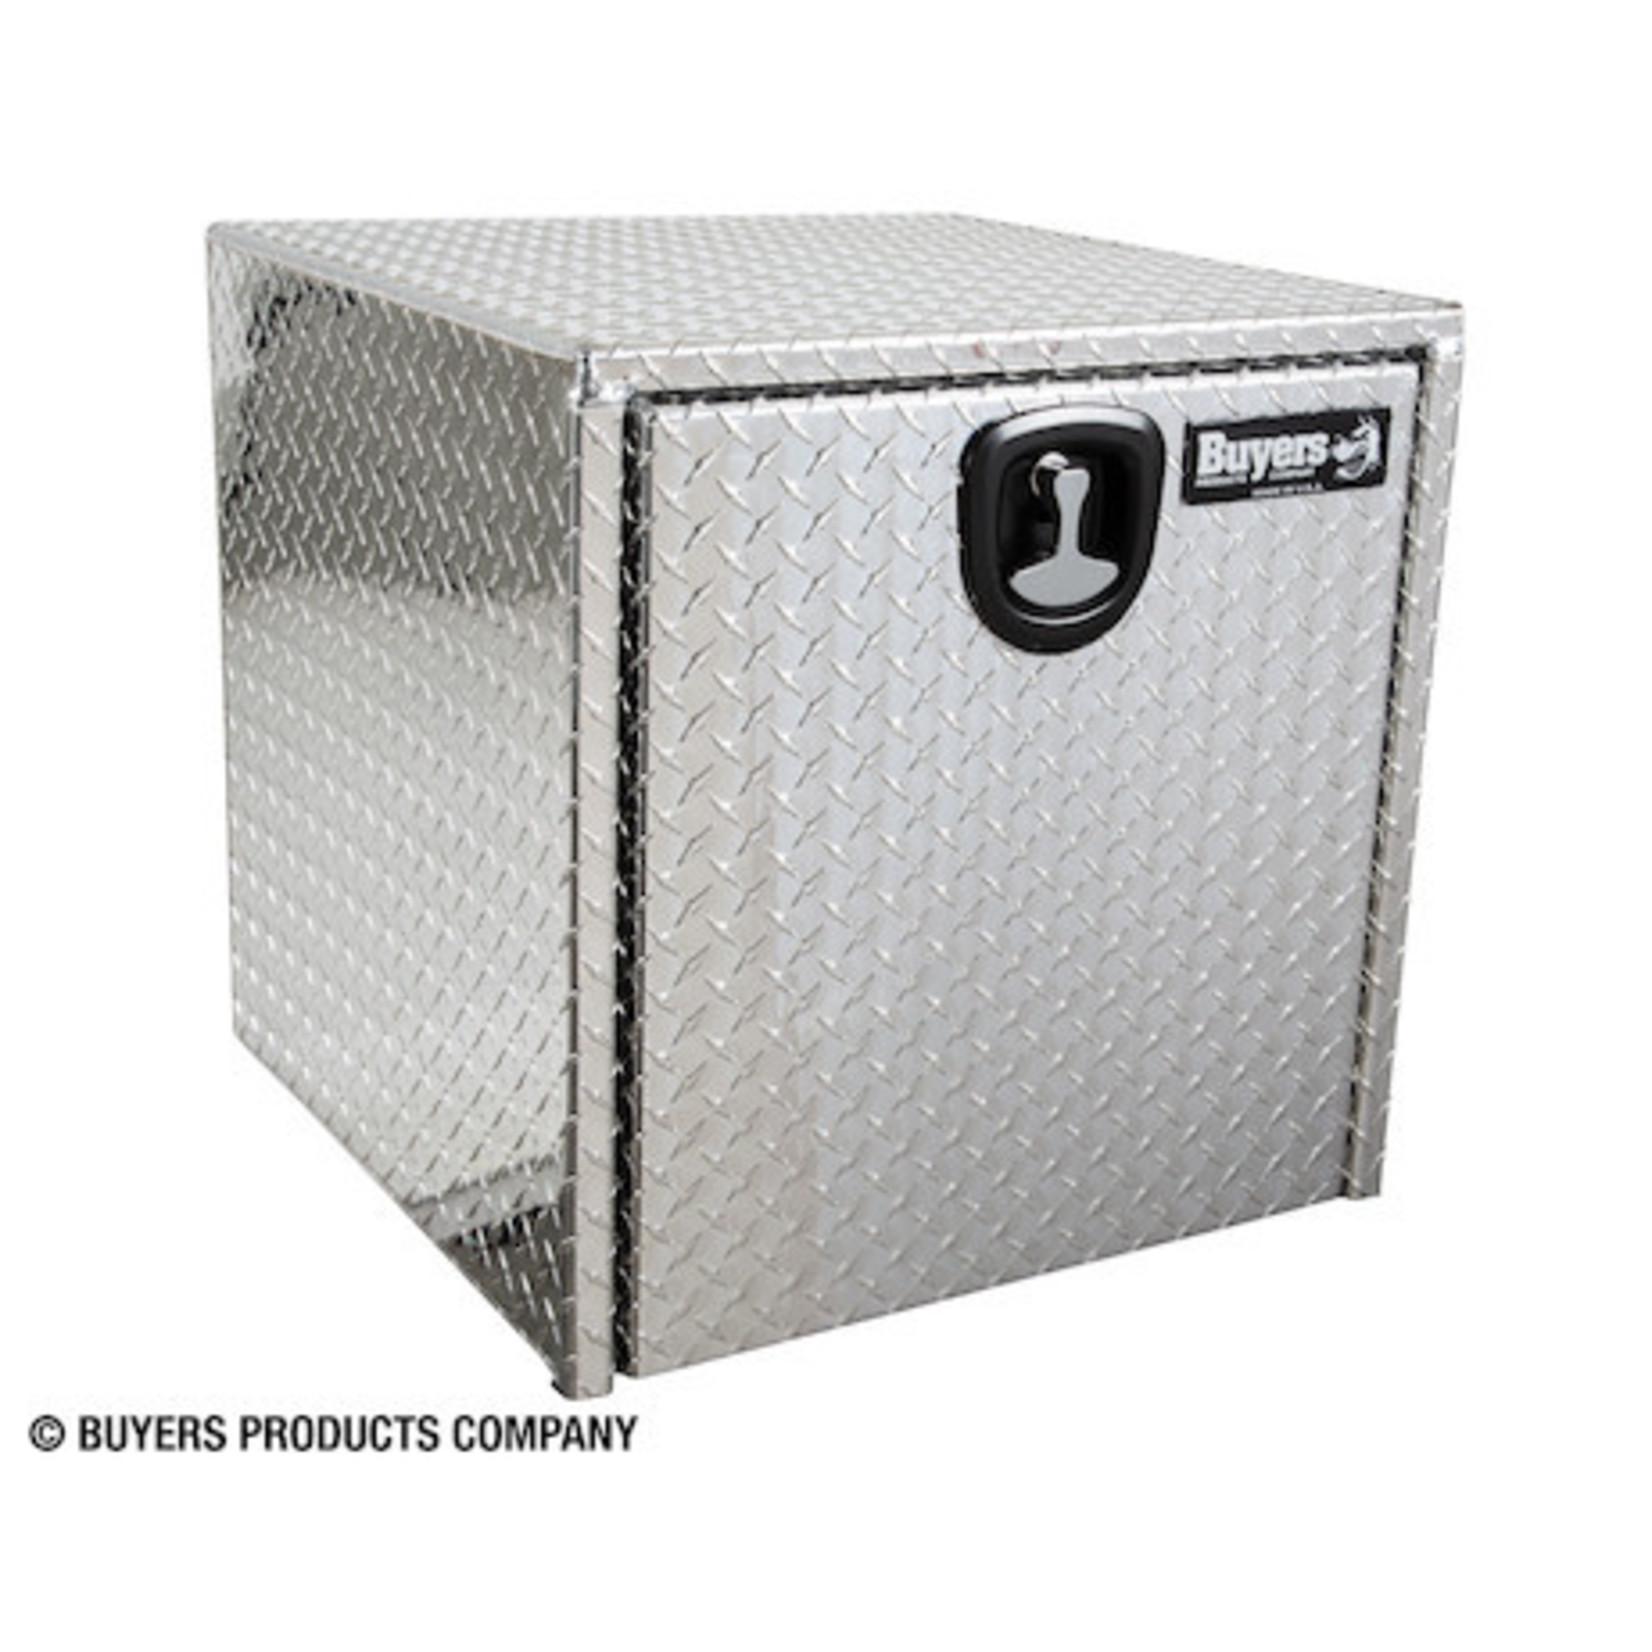 Buyers Products Company Diamond Tread Aluminum Underbody Truck Box with 3-Pt. Latch Series